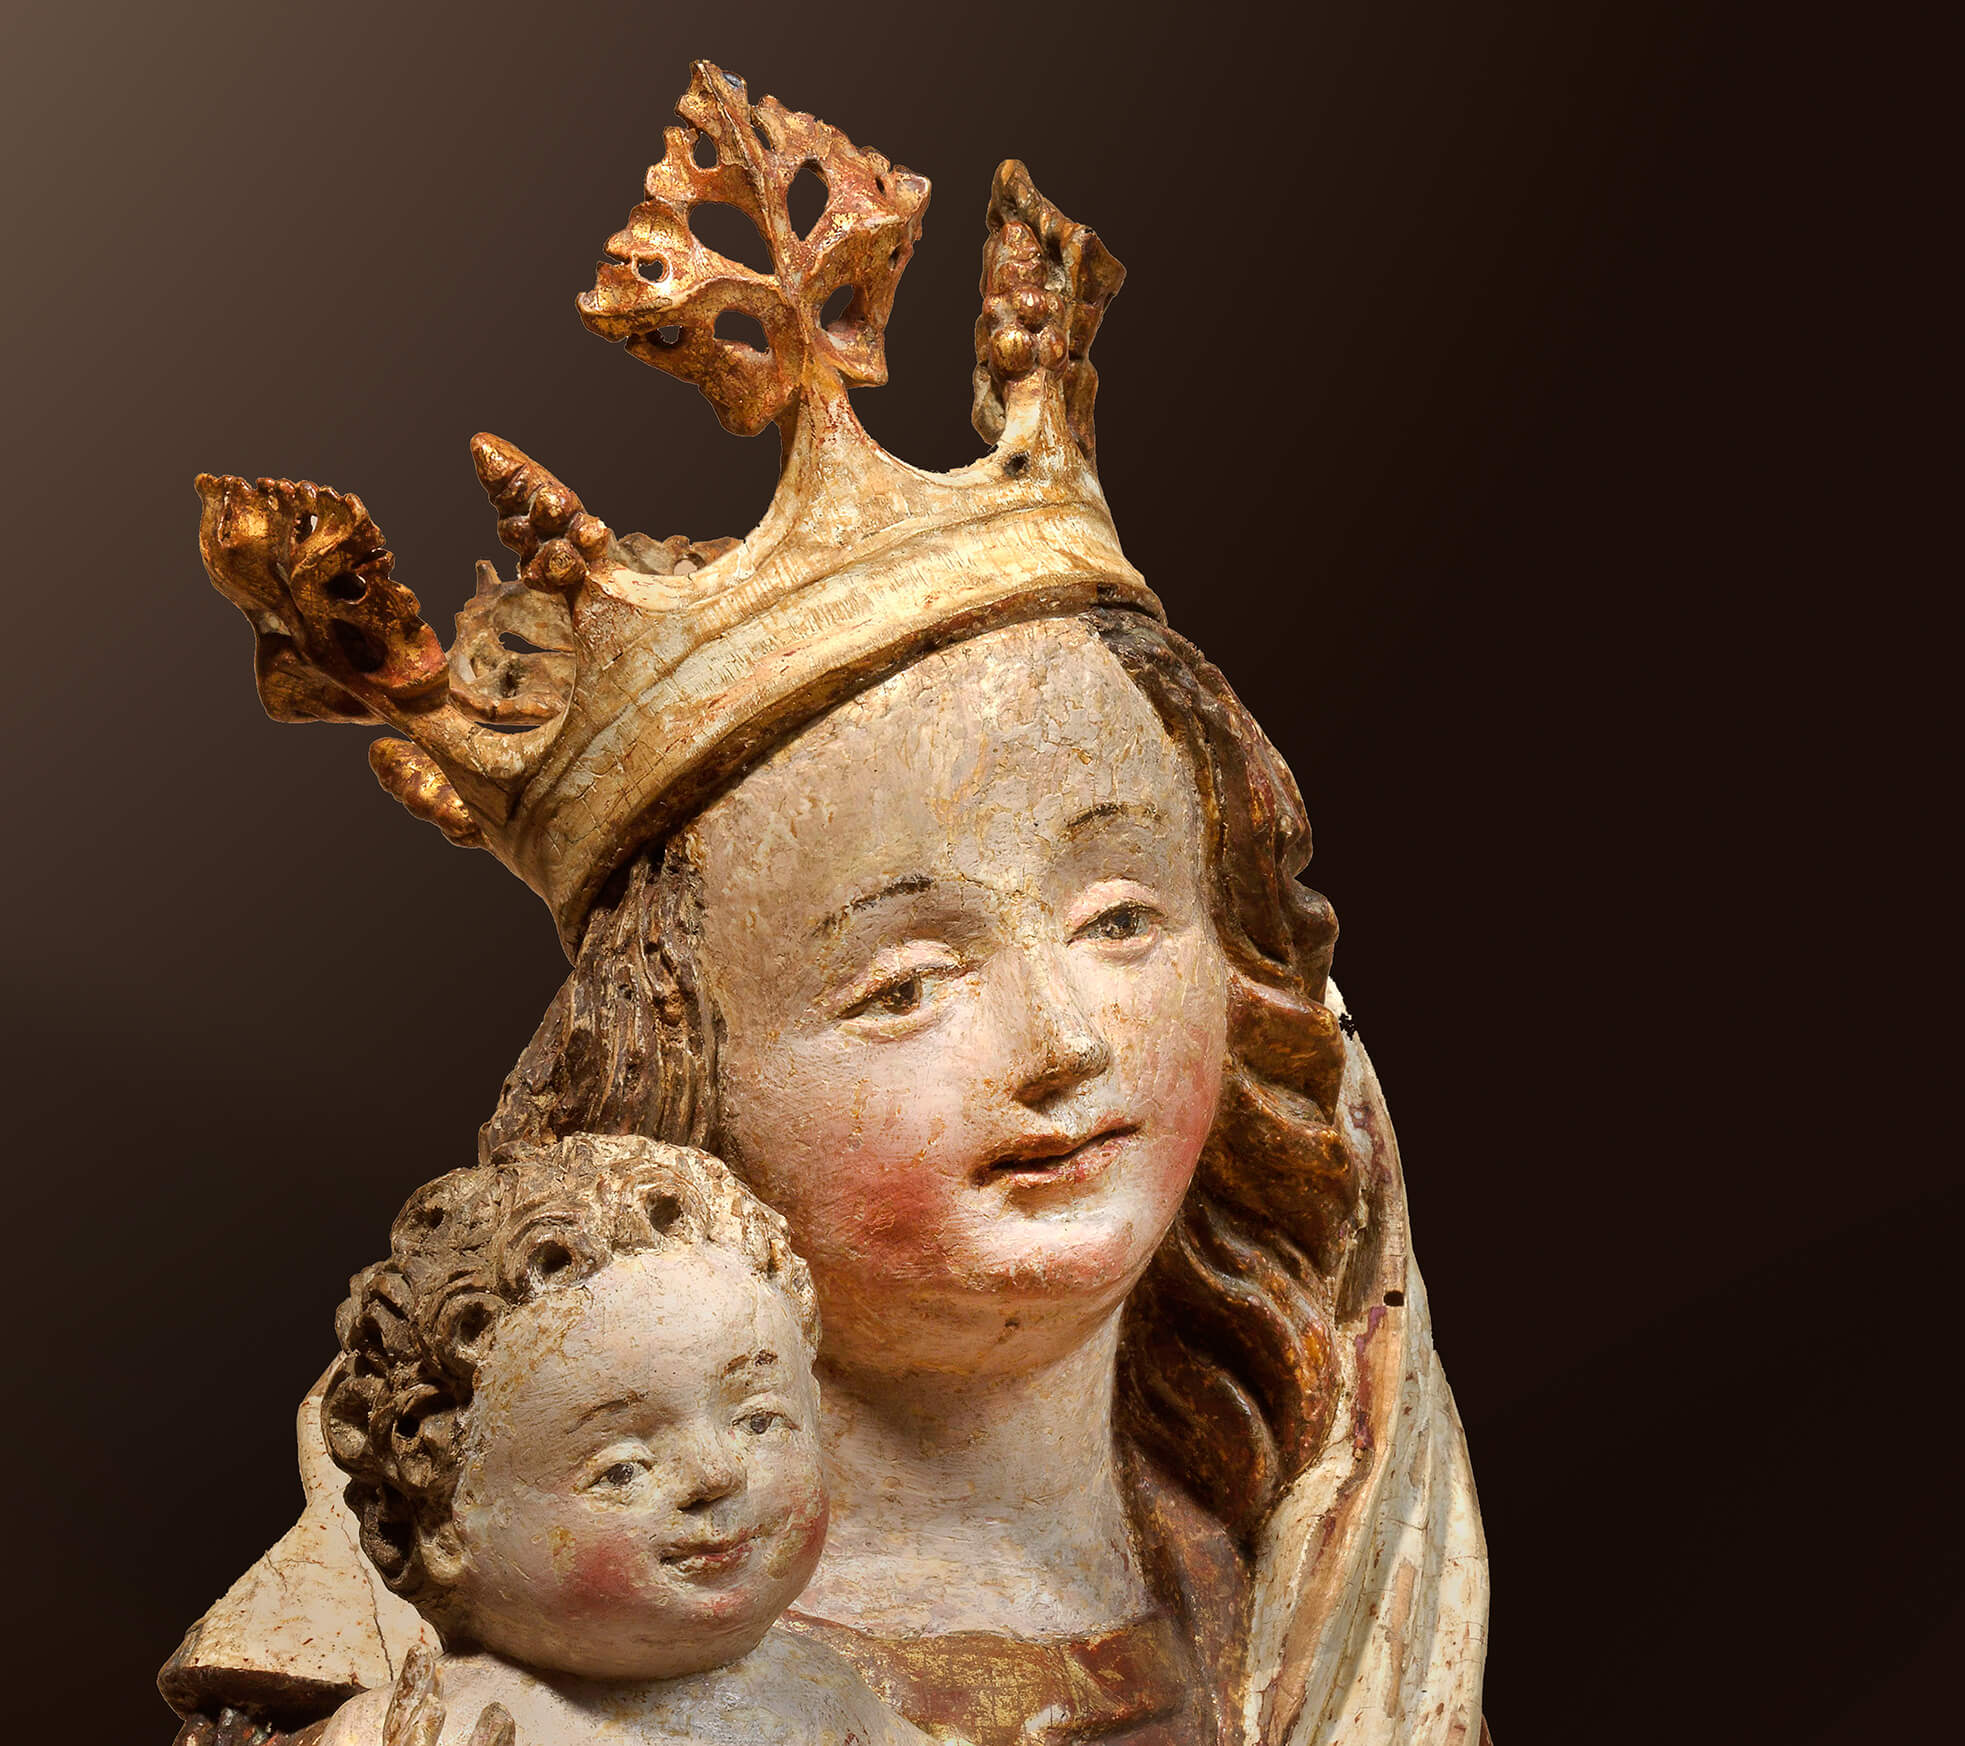 Madonna Bayern um 1510/20, Kopf